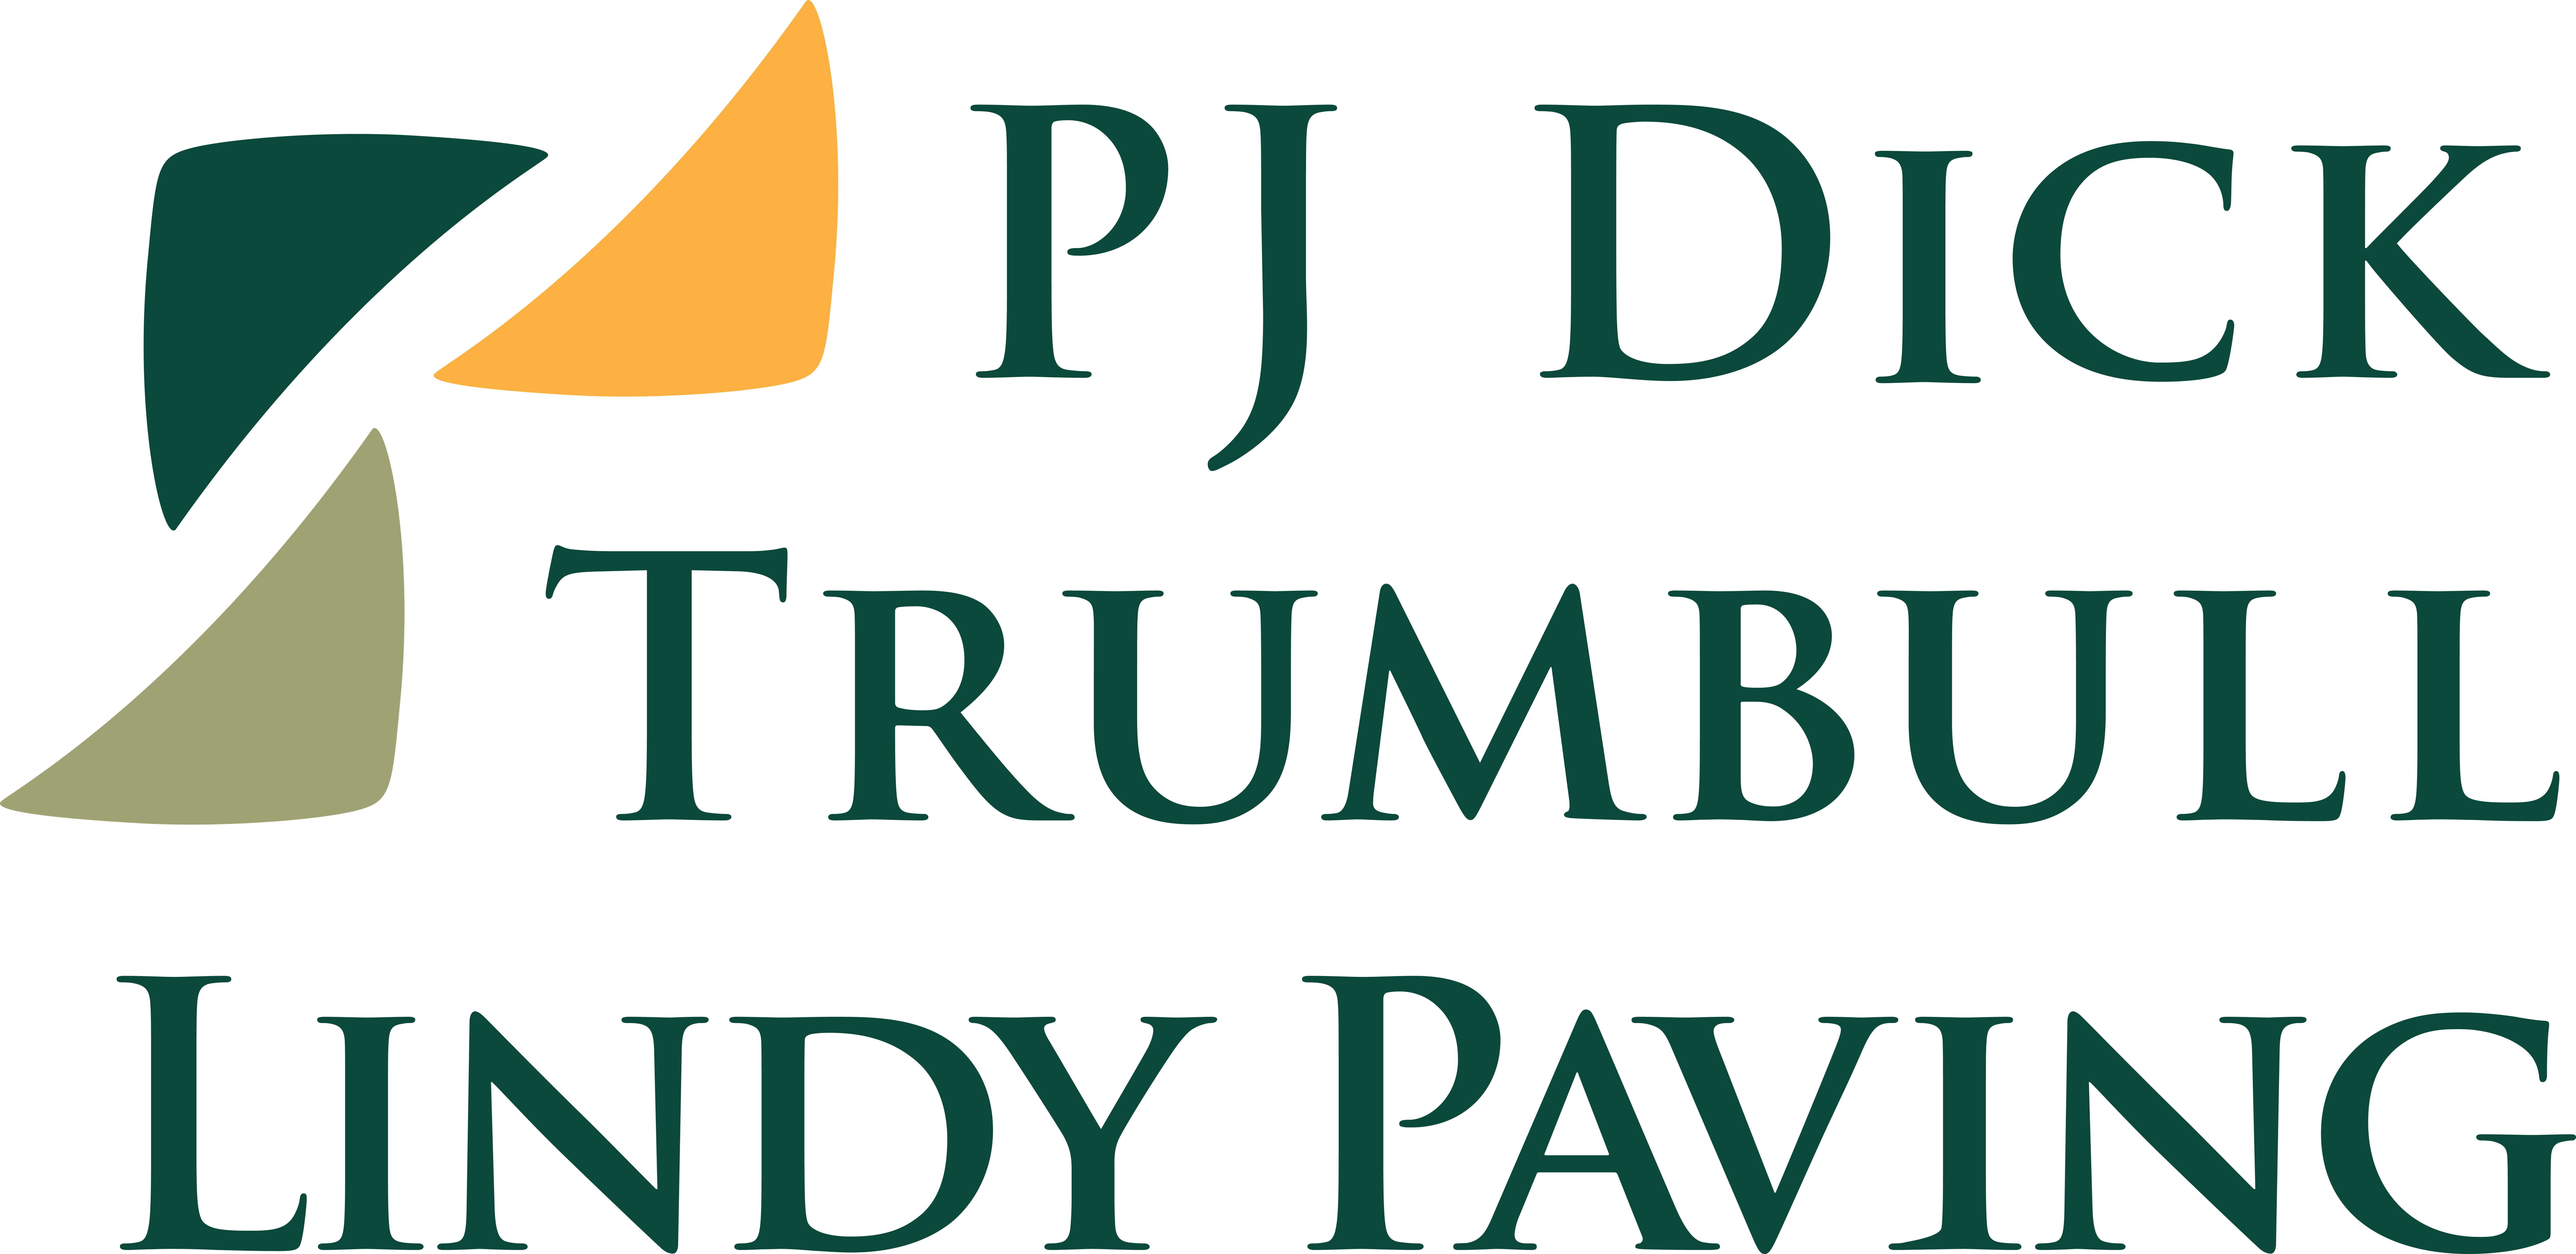 PJ Dick - Trumbull - Lindy Paving